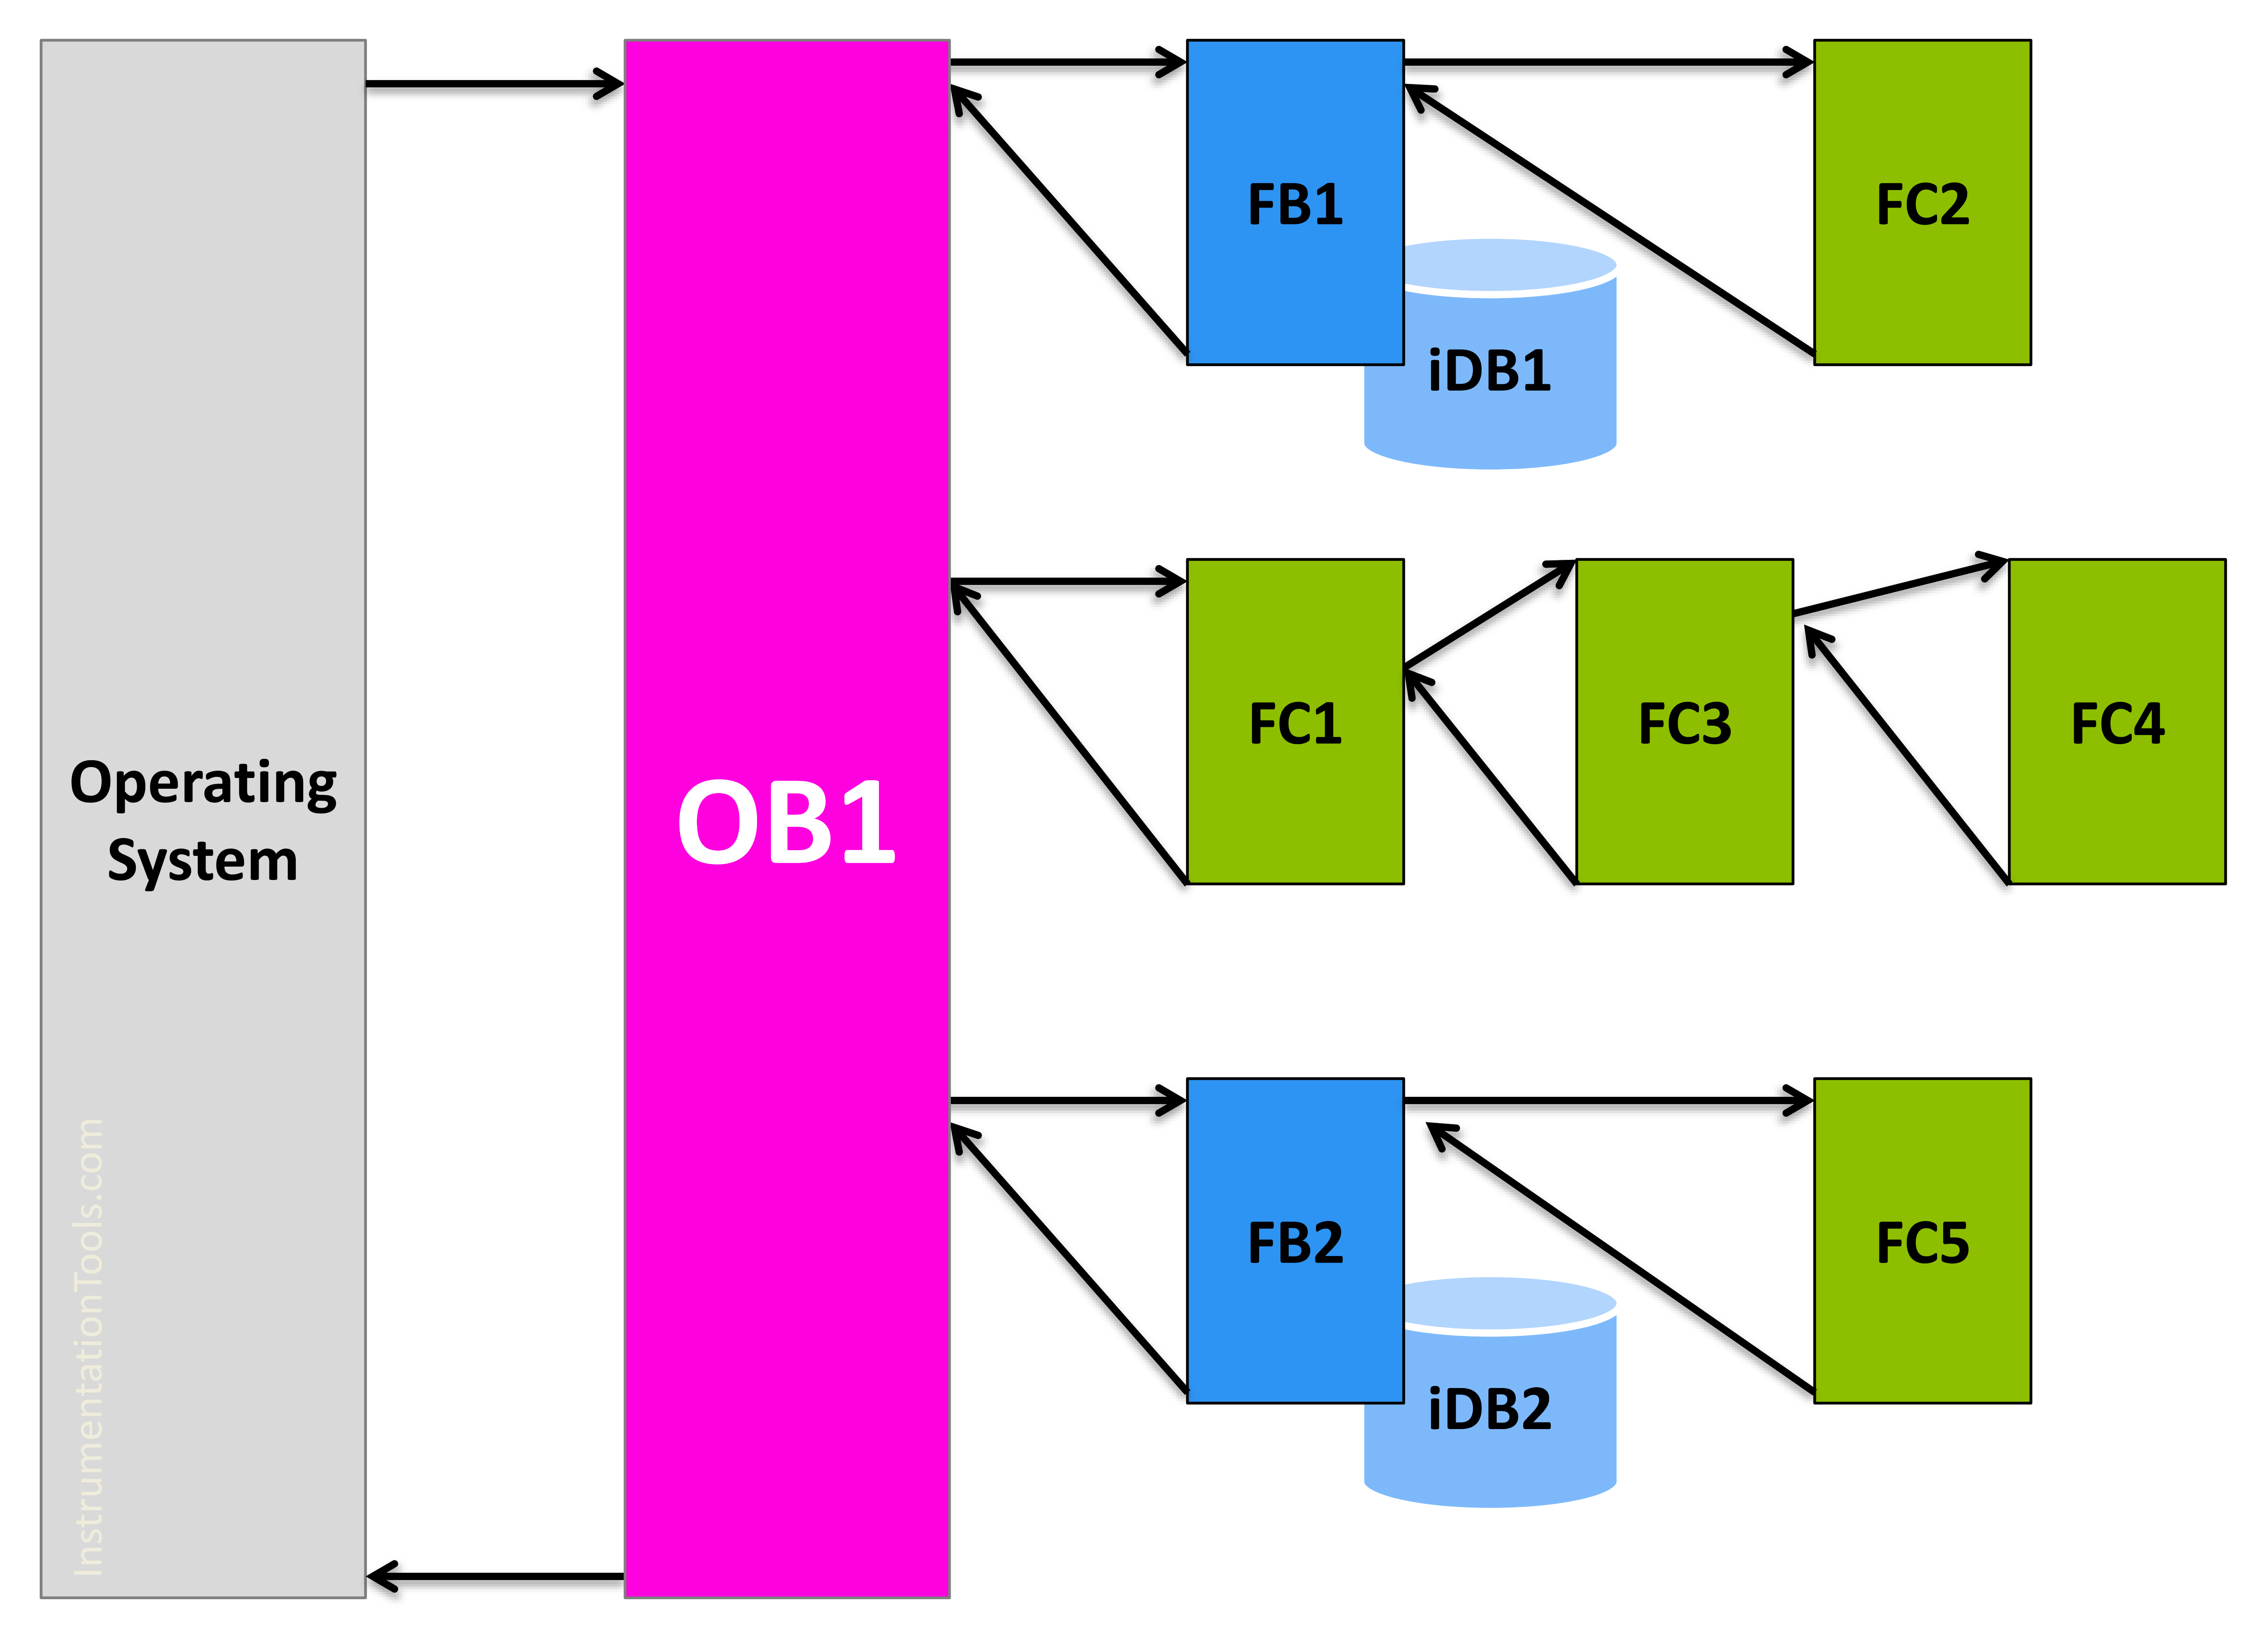 OB1 - Main Cyclic Organization Block in TIA Portal